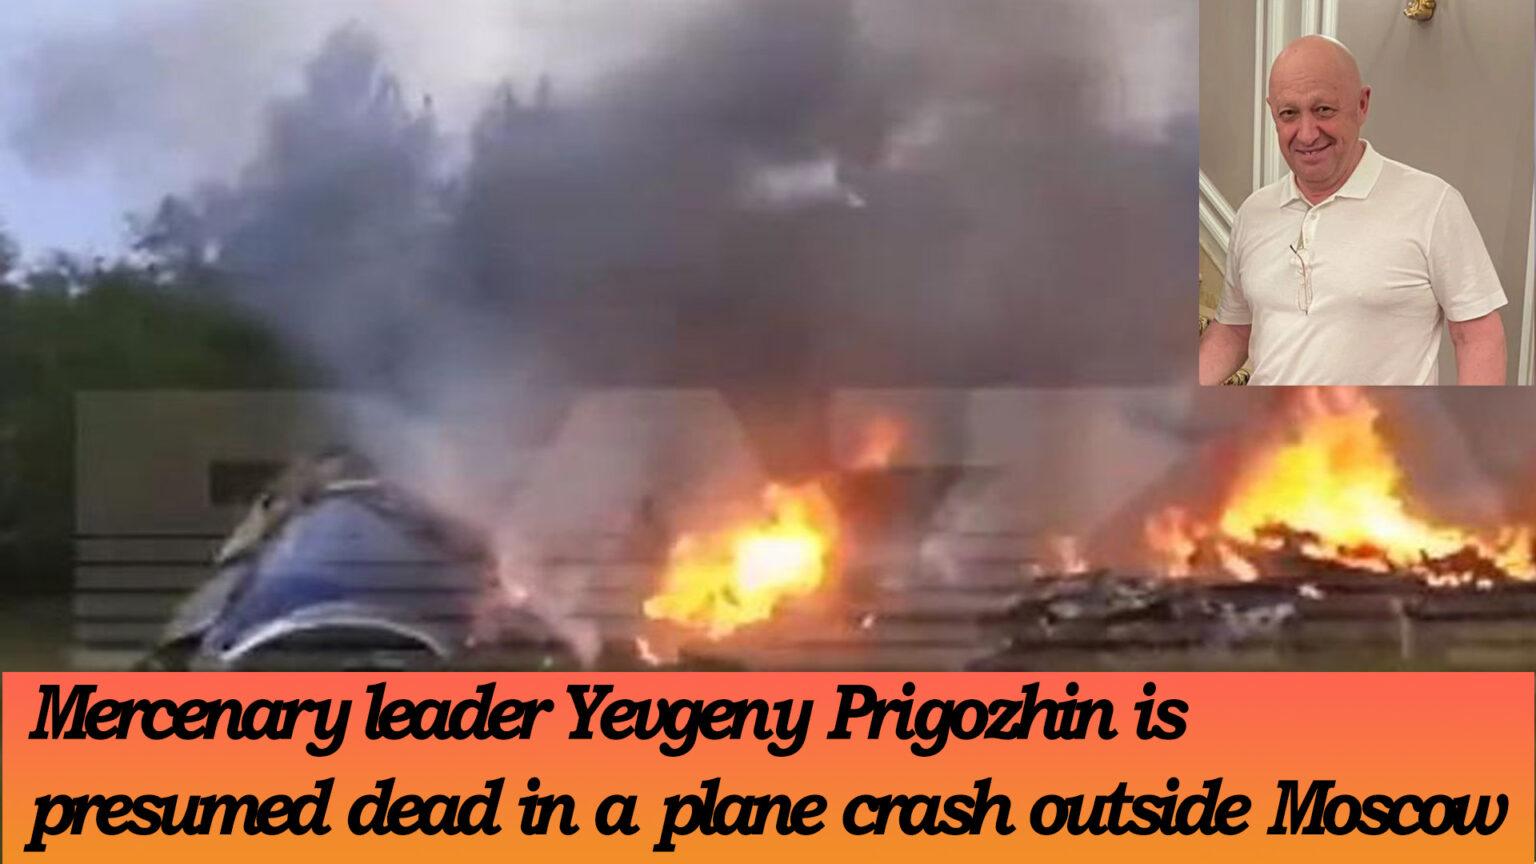 Tragedy Strikes: Russian Tycoon Yevgeny Prigozhin Killed in Mysterious Plane Crash - 7 Key Facts